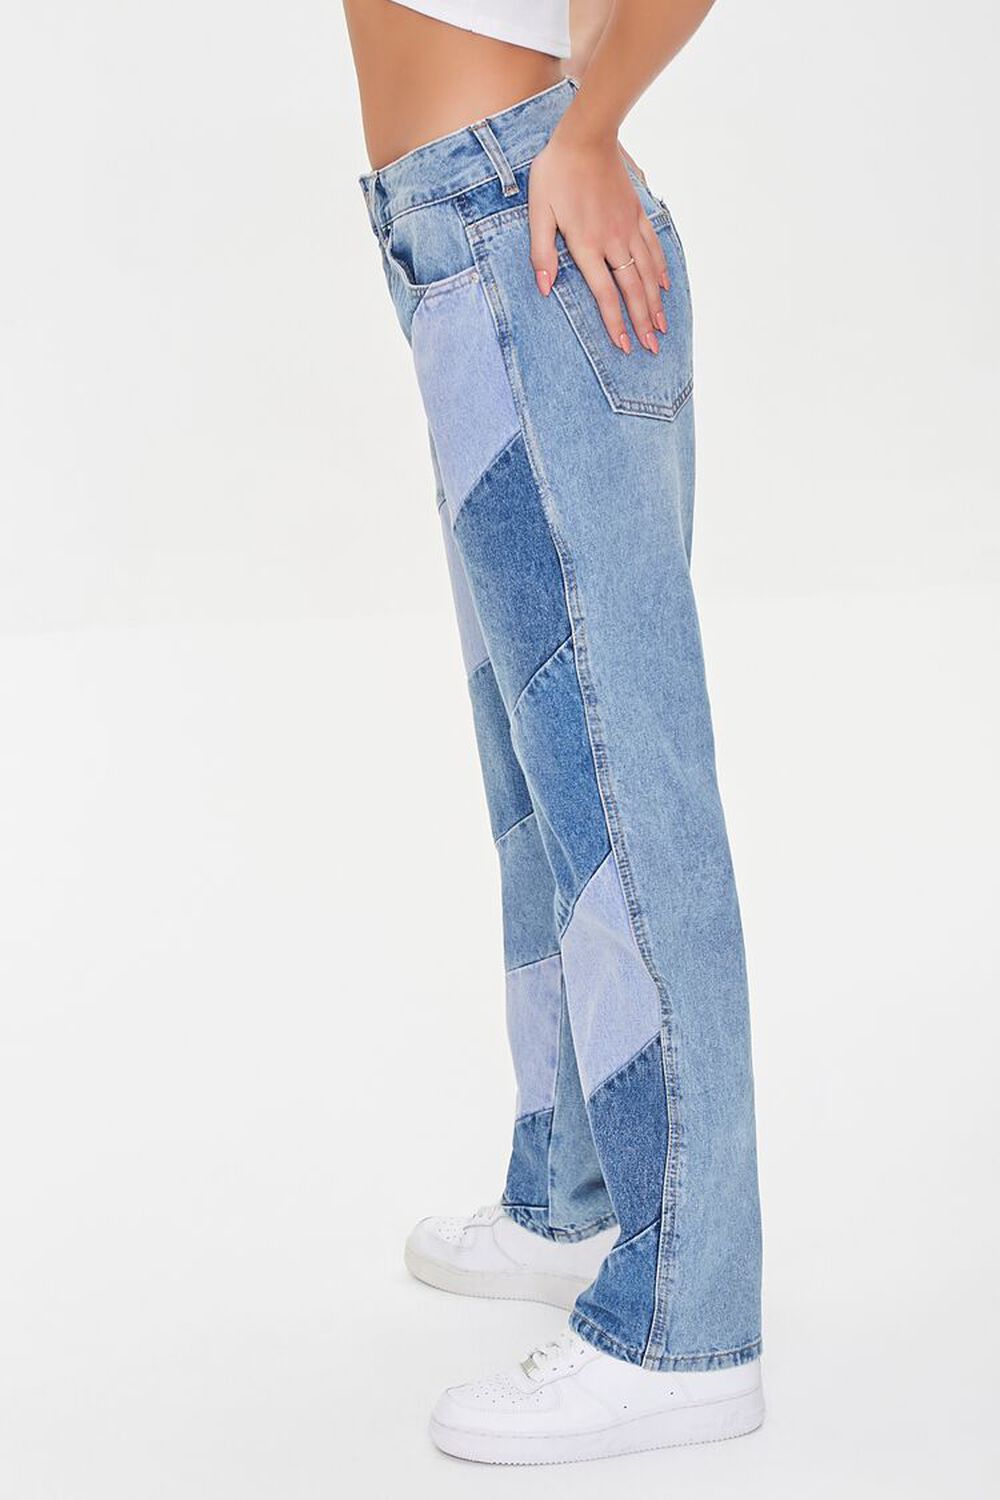 MEDIUM DENIM/MULTI Reworked Diagonal Striped Jeans, image 3